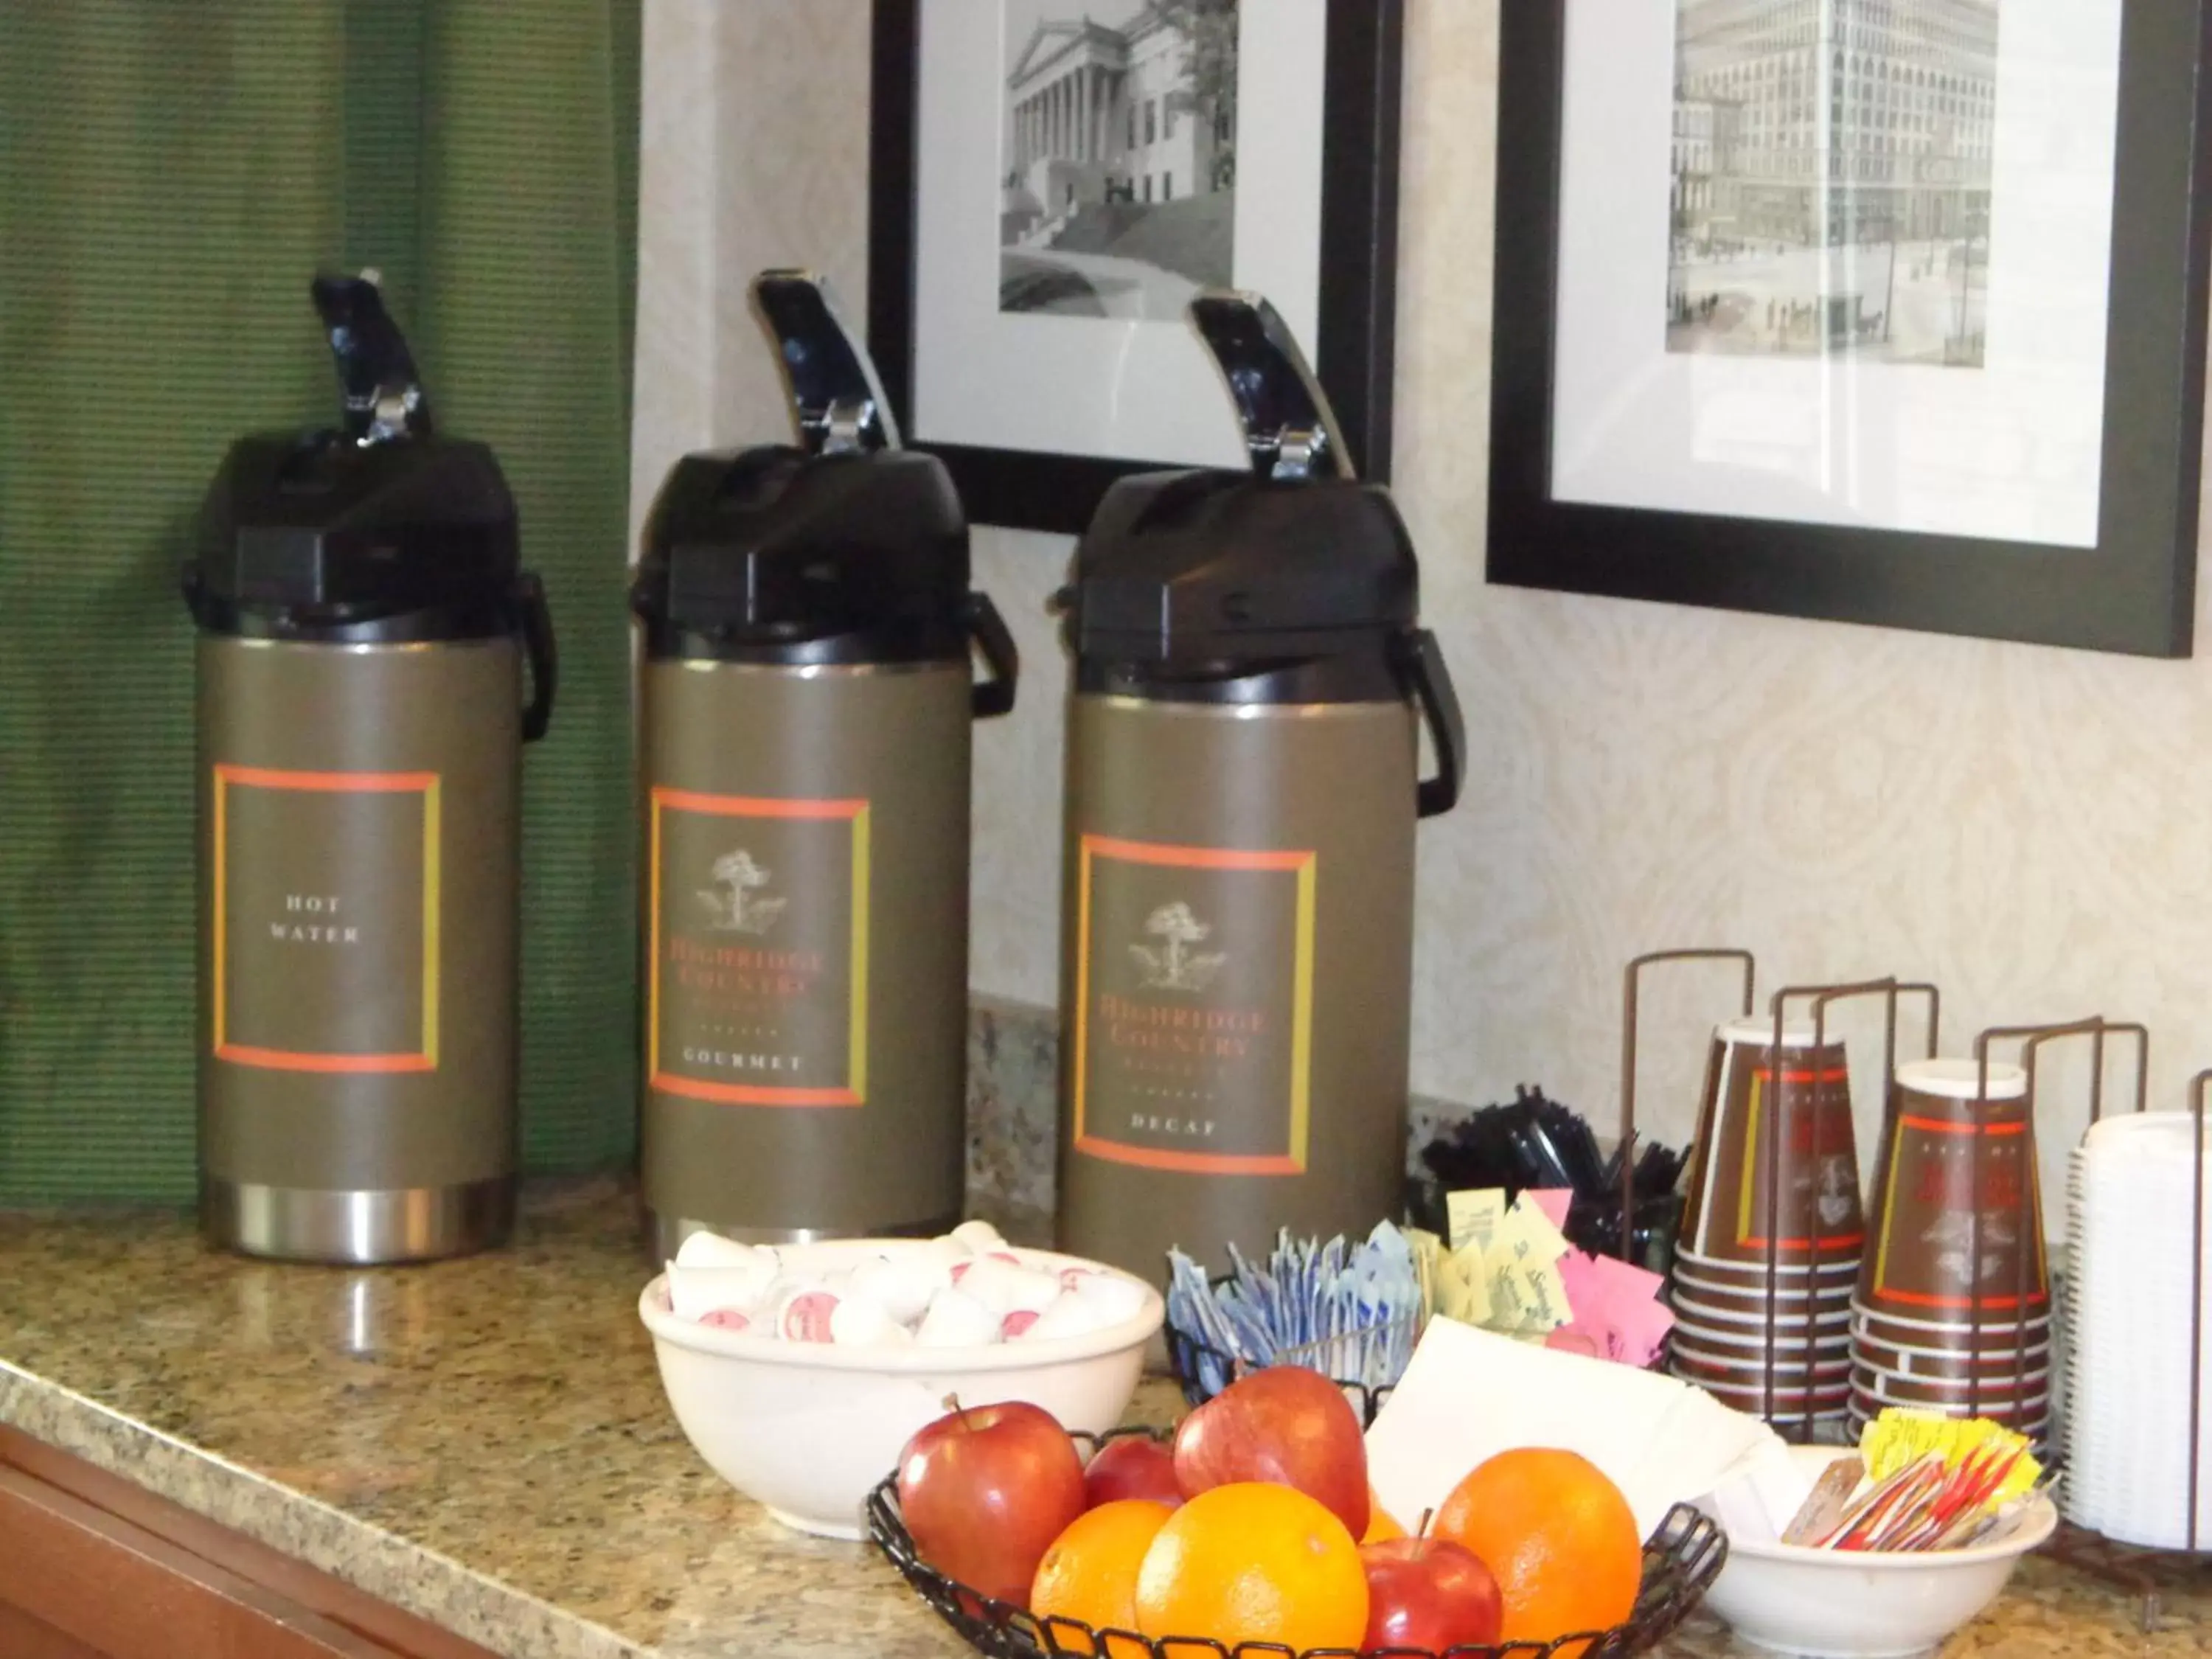 Coffee/tea facilities in Country Inn & Suites Buffalo South I-90, NY